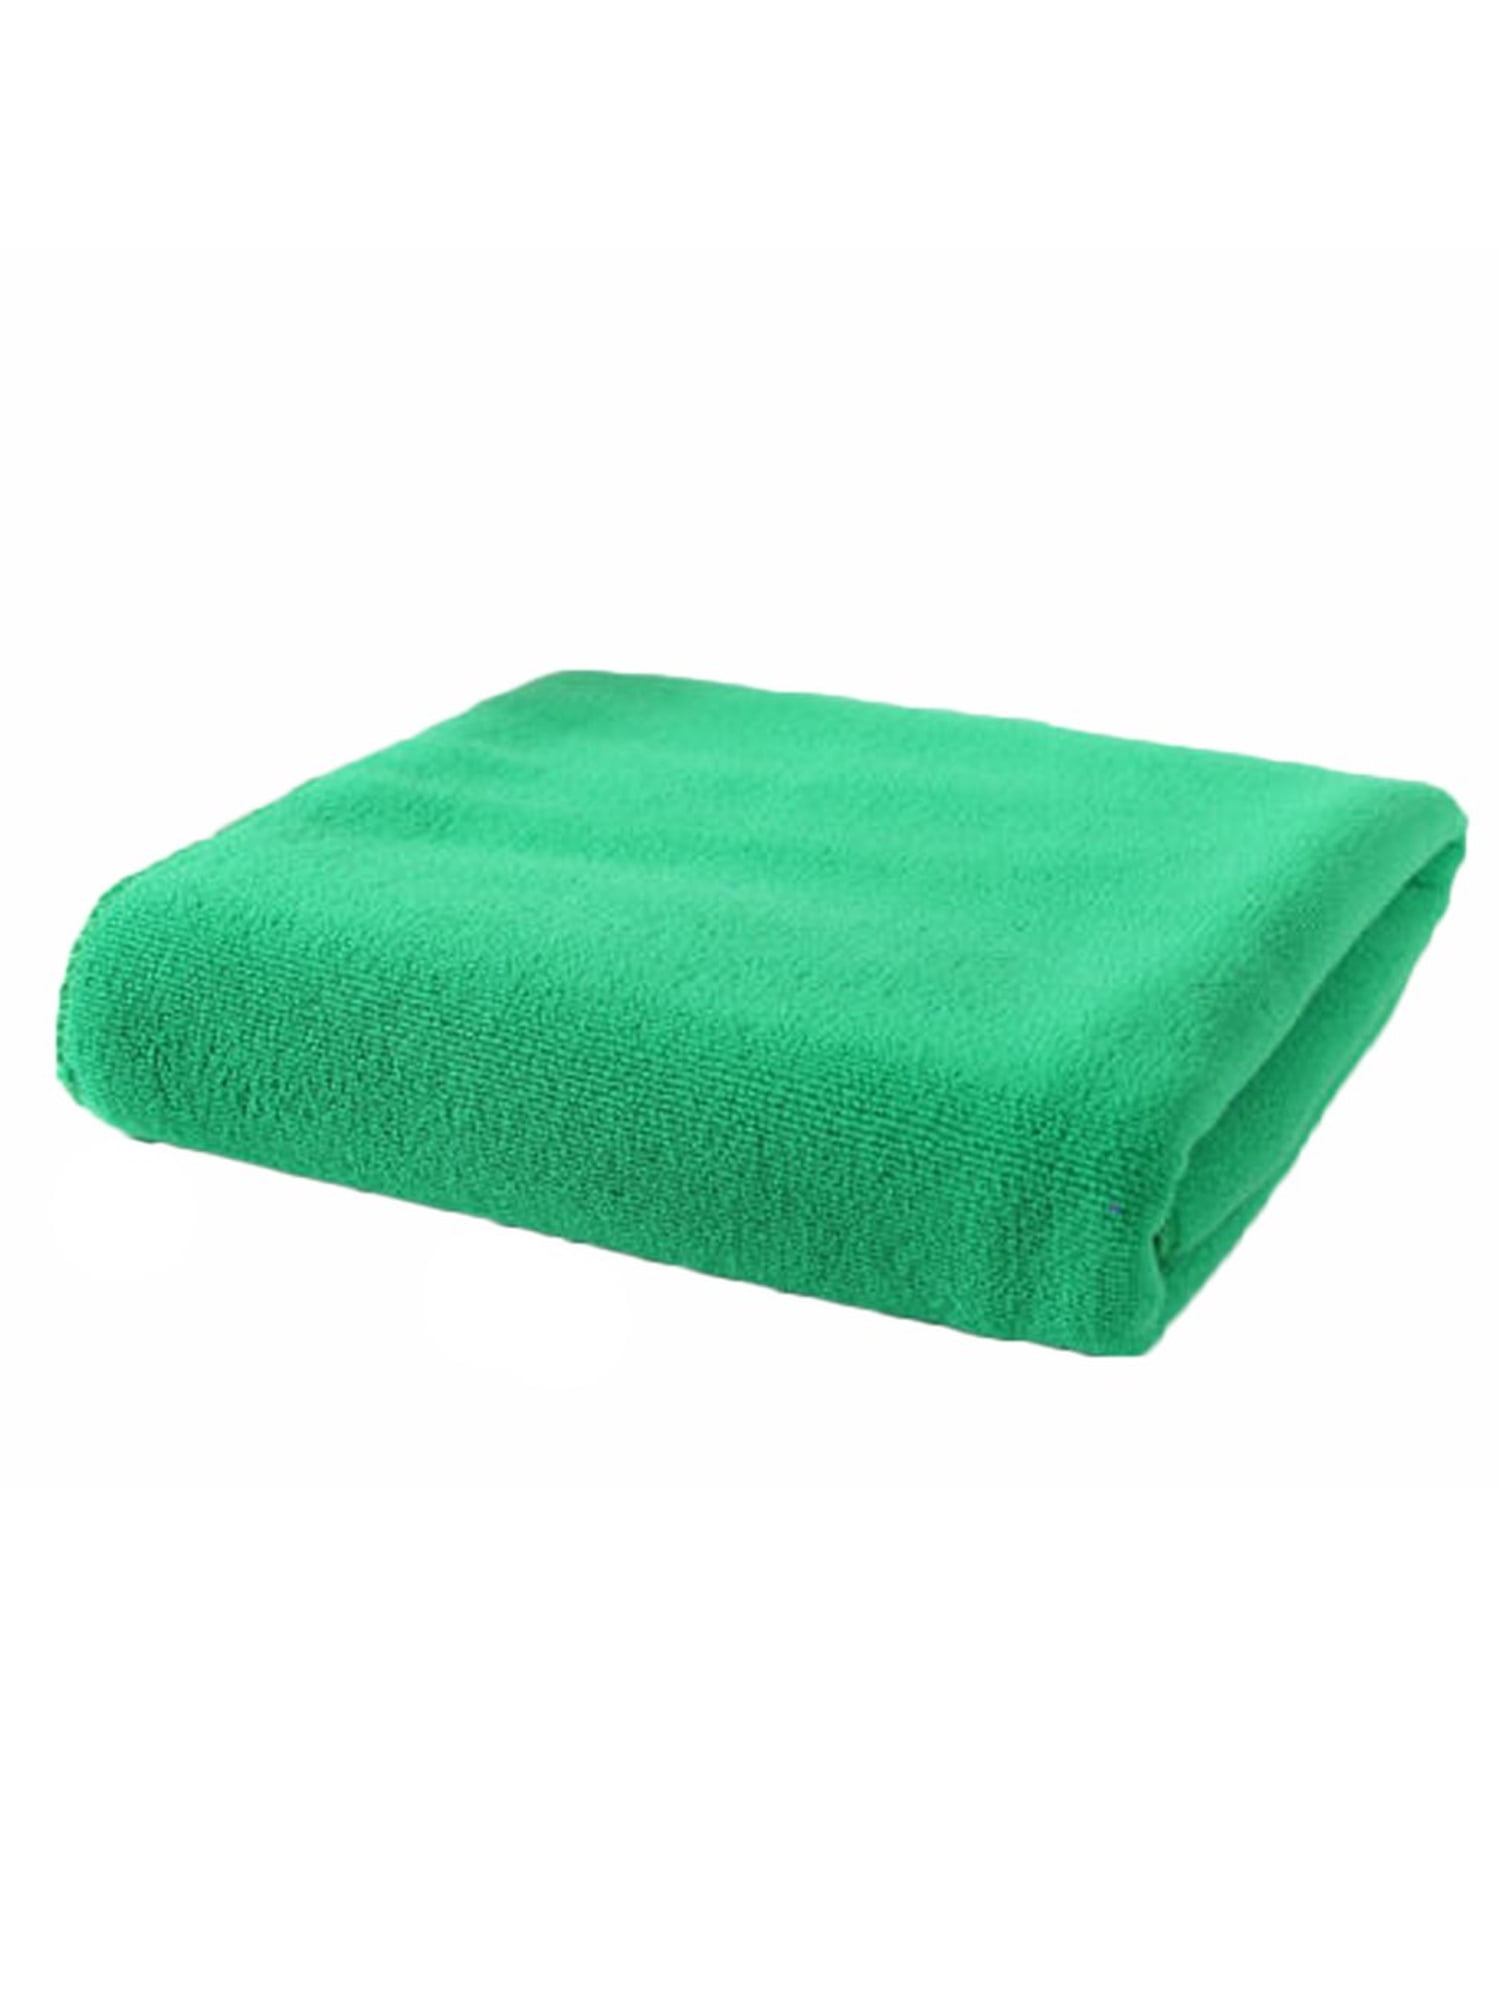 70x150cm Absorbent Microfiber Bath Beach Towel Shower Drying Washcloth Swimwear 